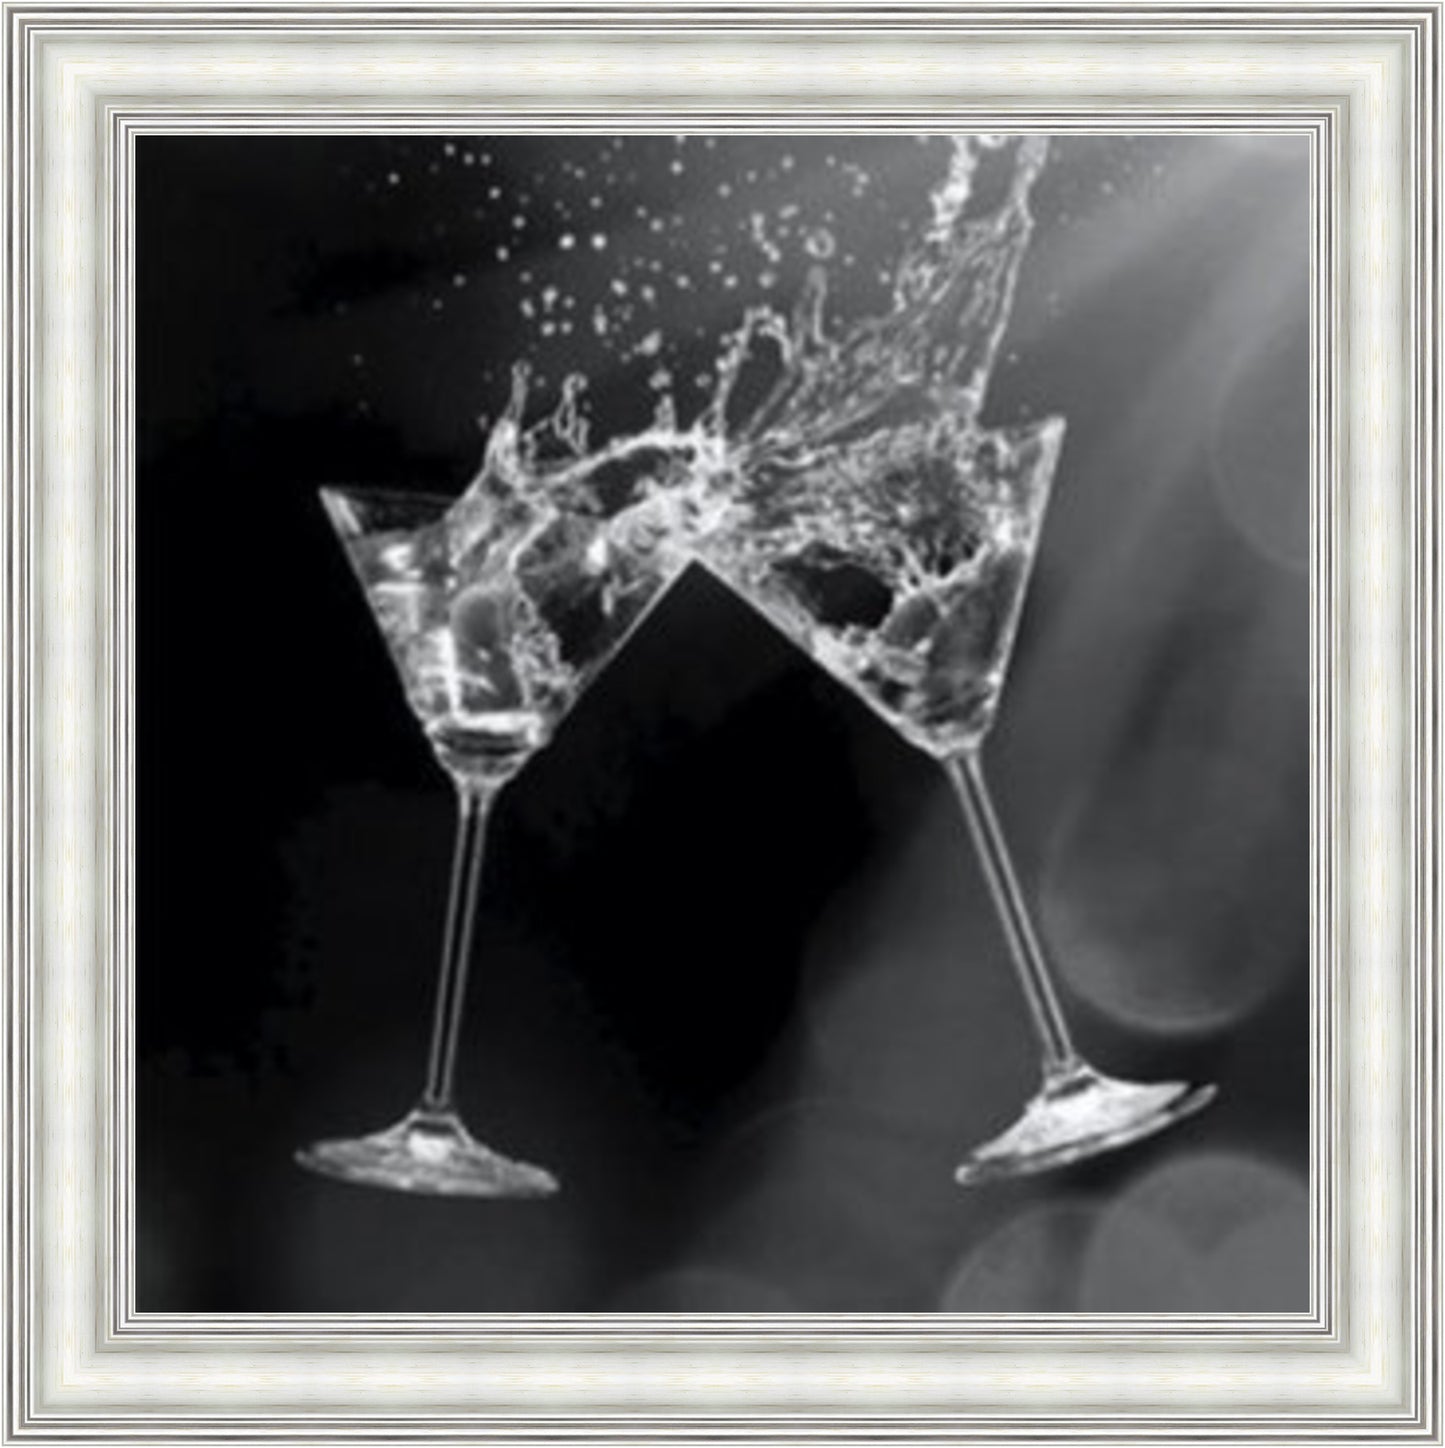 Cocktail Cheers - Black & White - Slim Frame